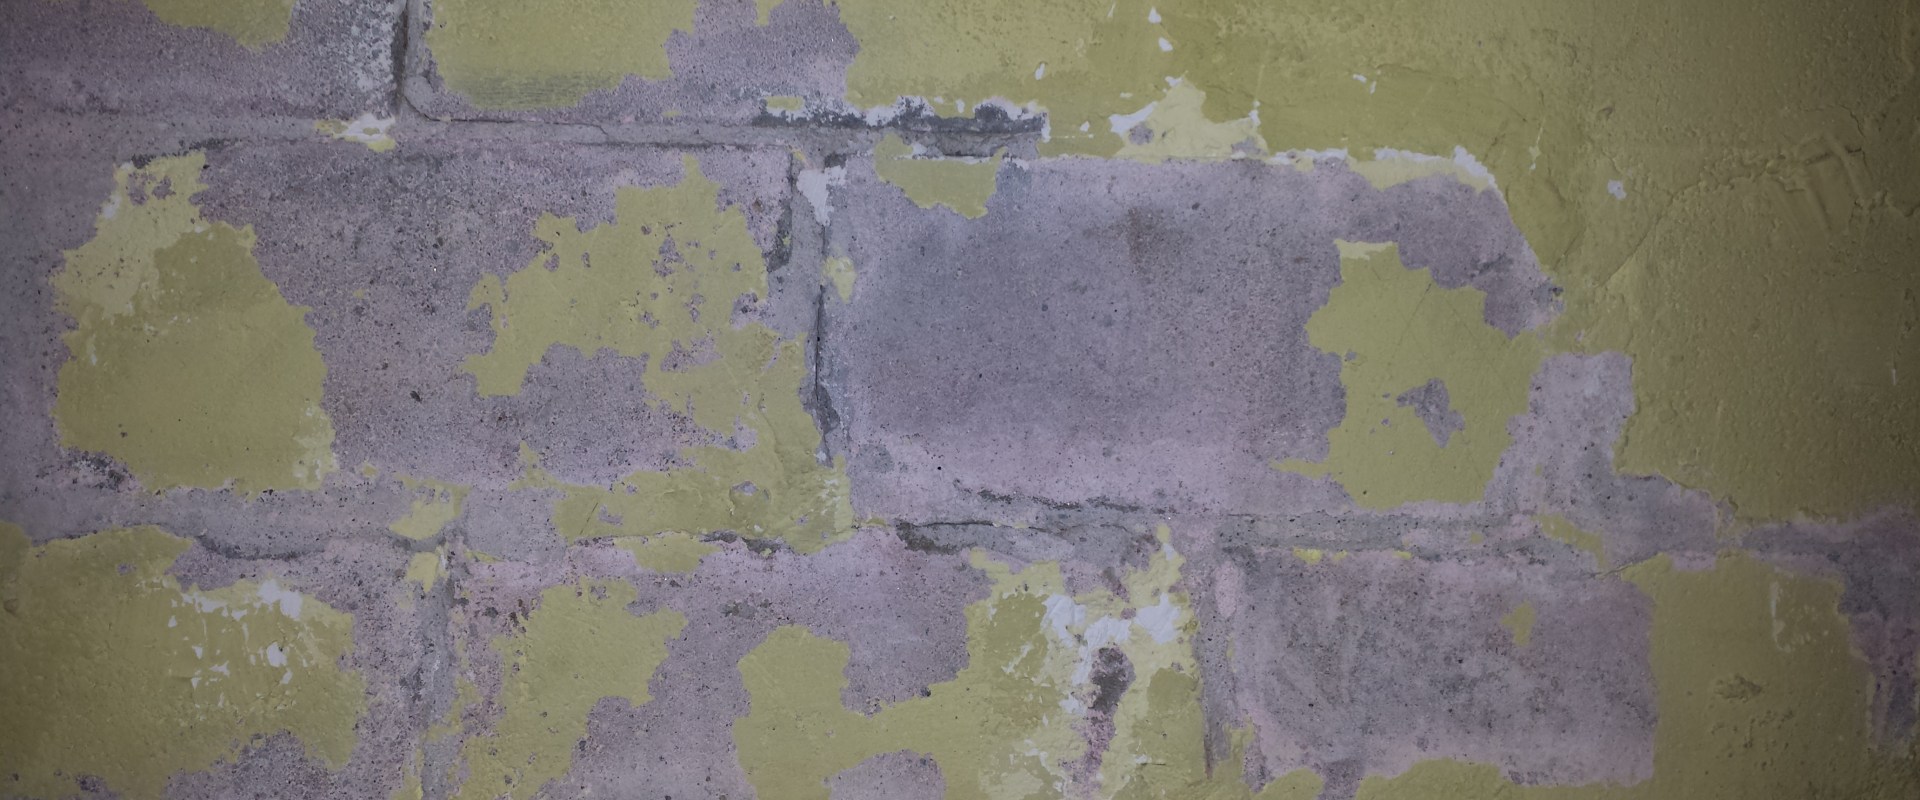 How do you repair a damaged cinder block wall?